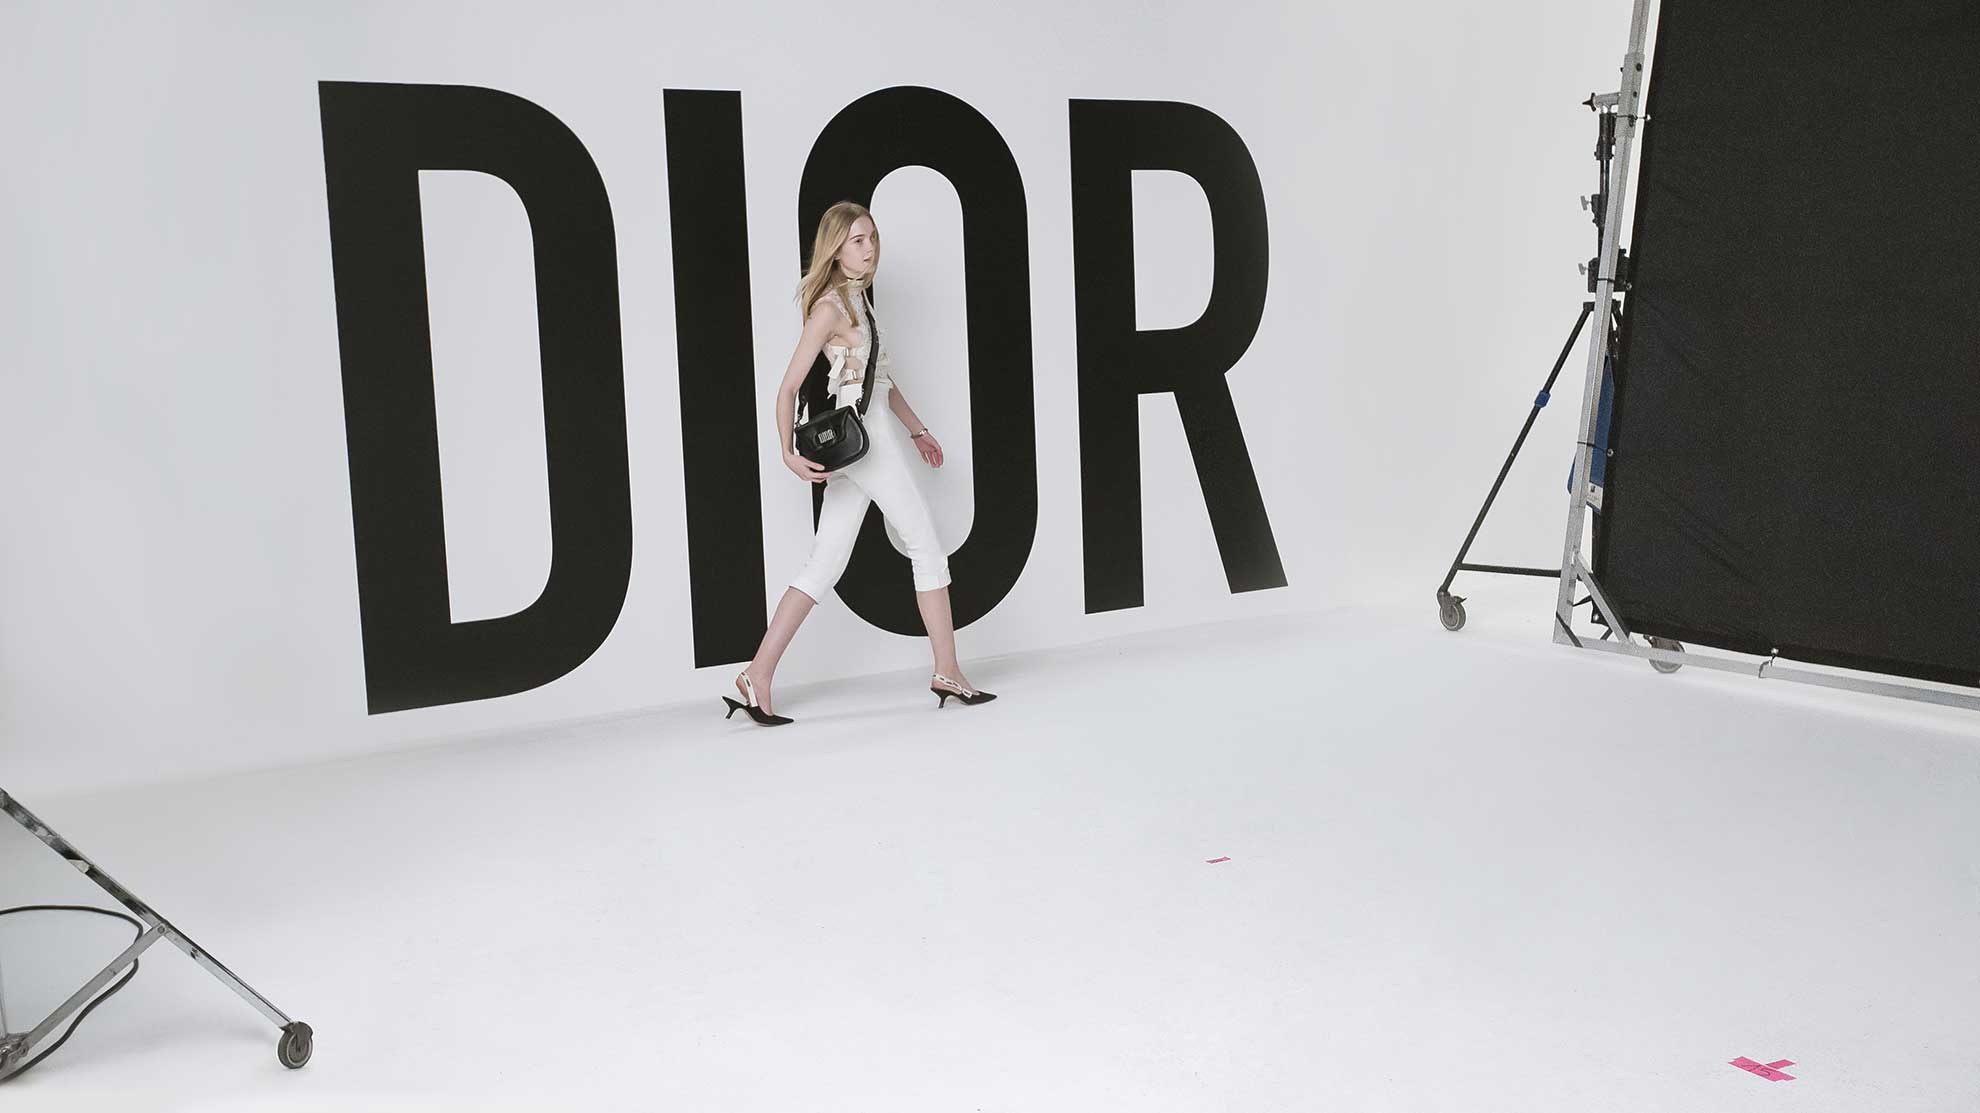 Dior's Spring/Summer 17 Campaign Videos